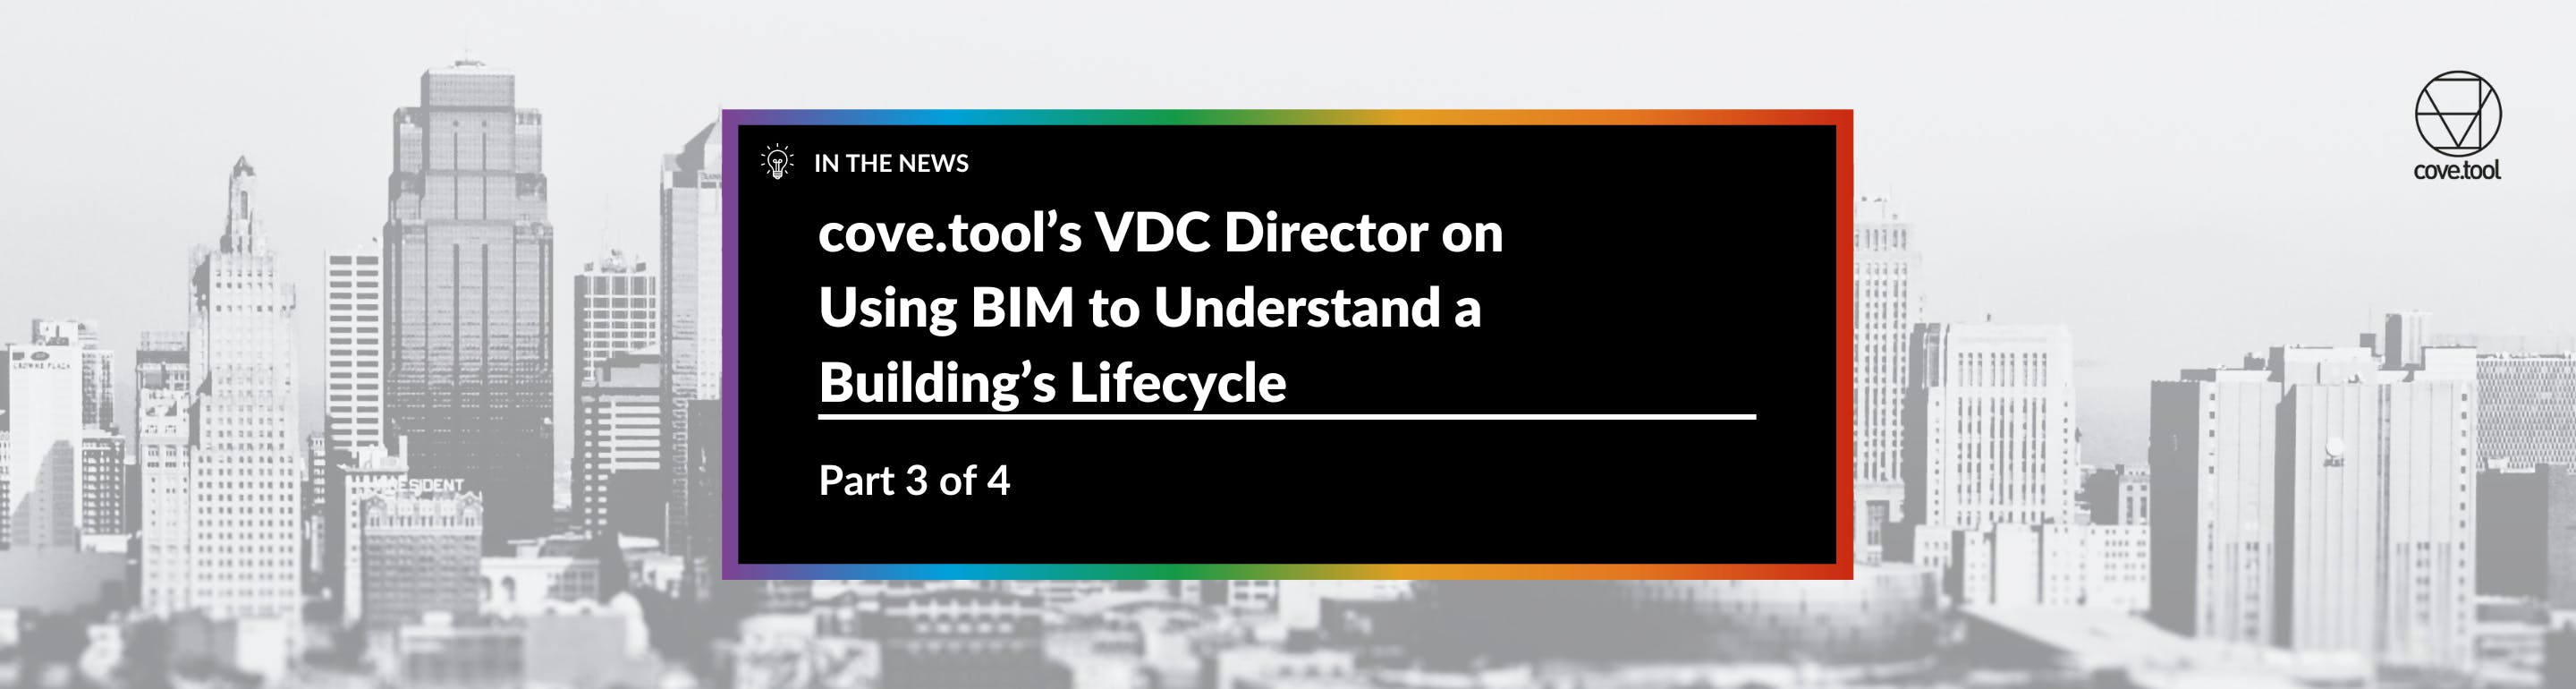 cove.tool’s VDC Director Talks Data, BIM in Modern Contractor Solutions 